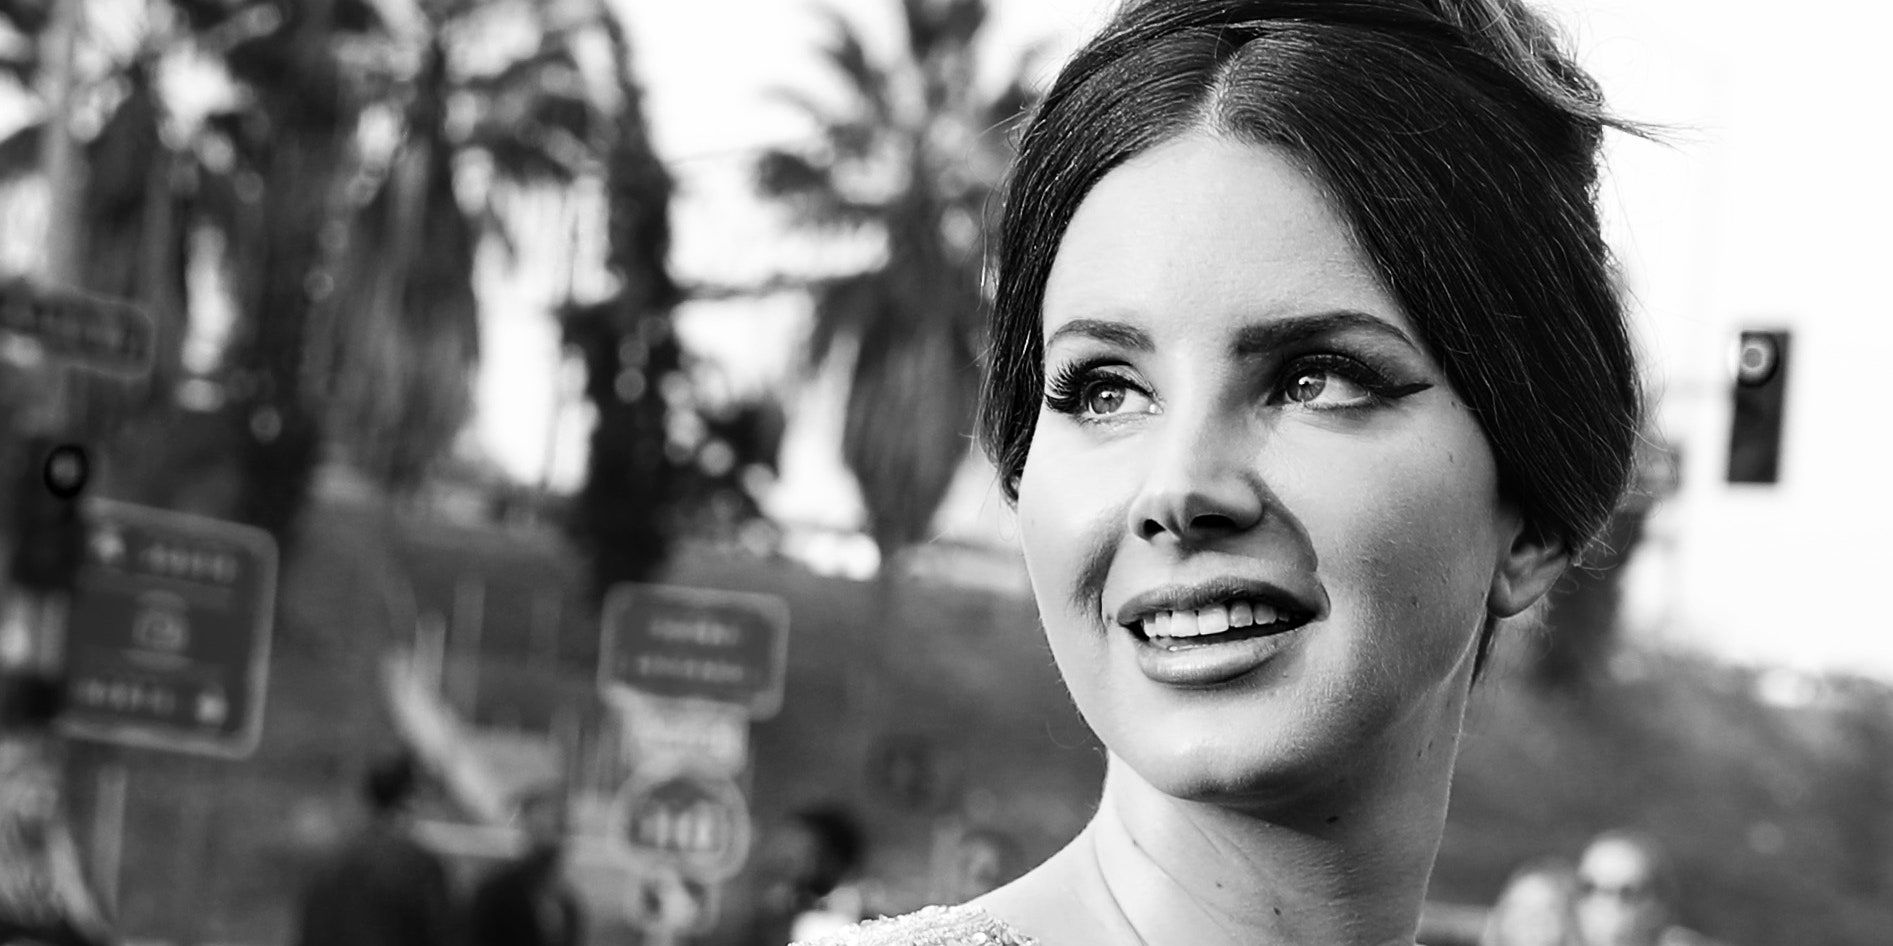 Lana Del Rey Announces New Album Blue Banisters, Teases New Song: Listen